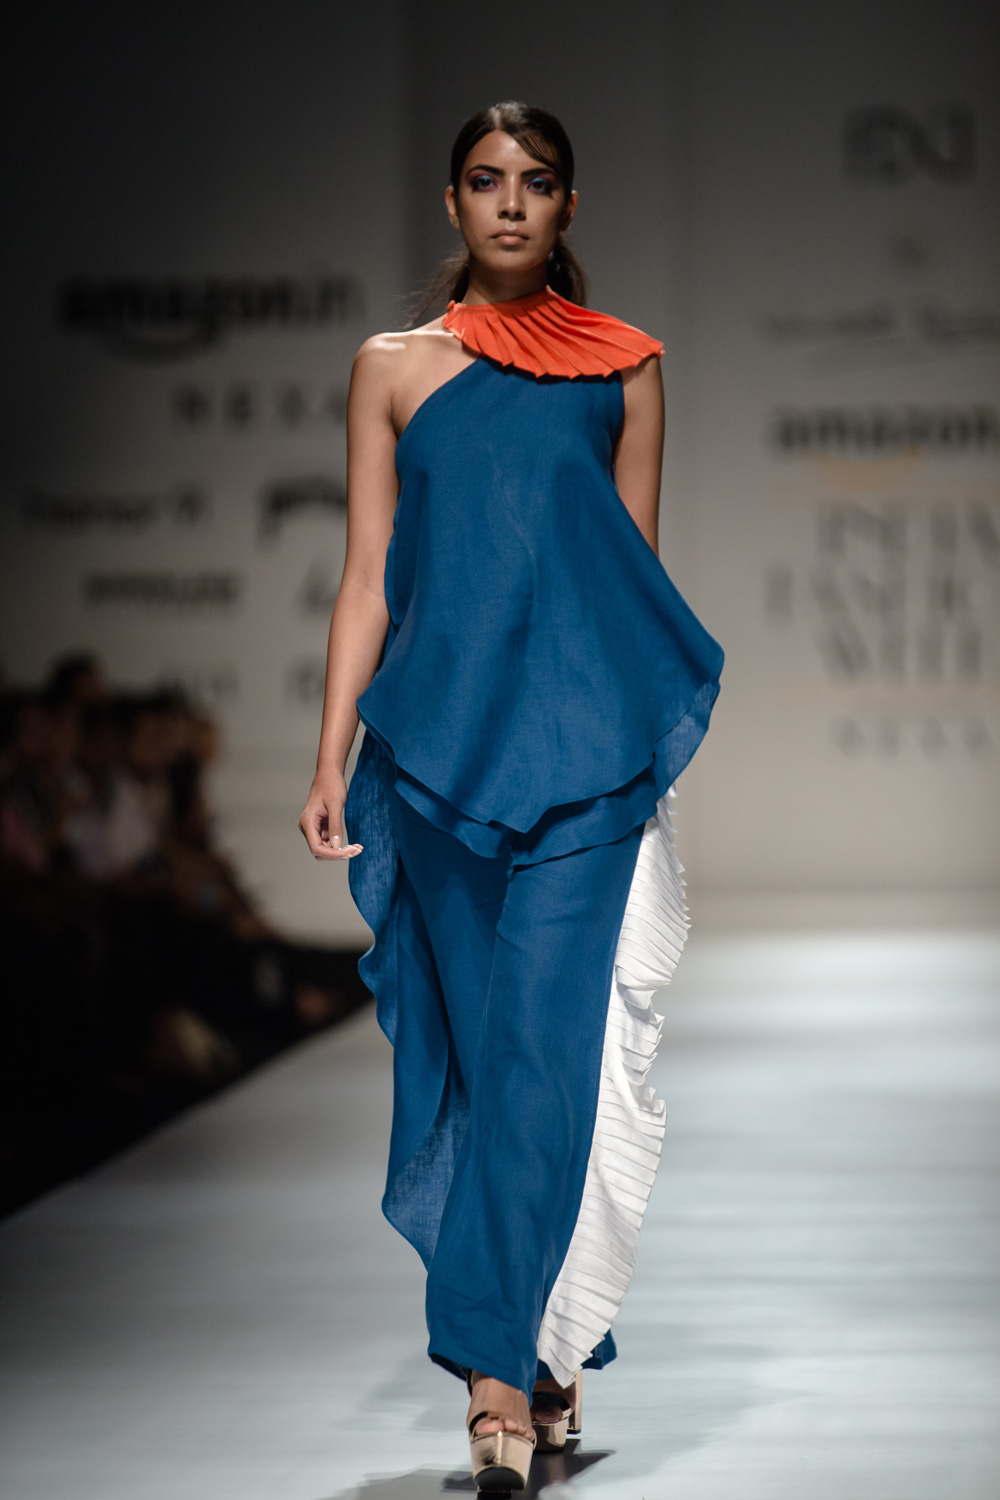 Wendell Rodricks FDCI Amazon India Fashion Week Spring Summer 2018 Look 4